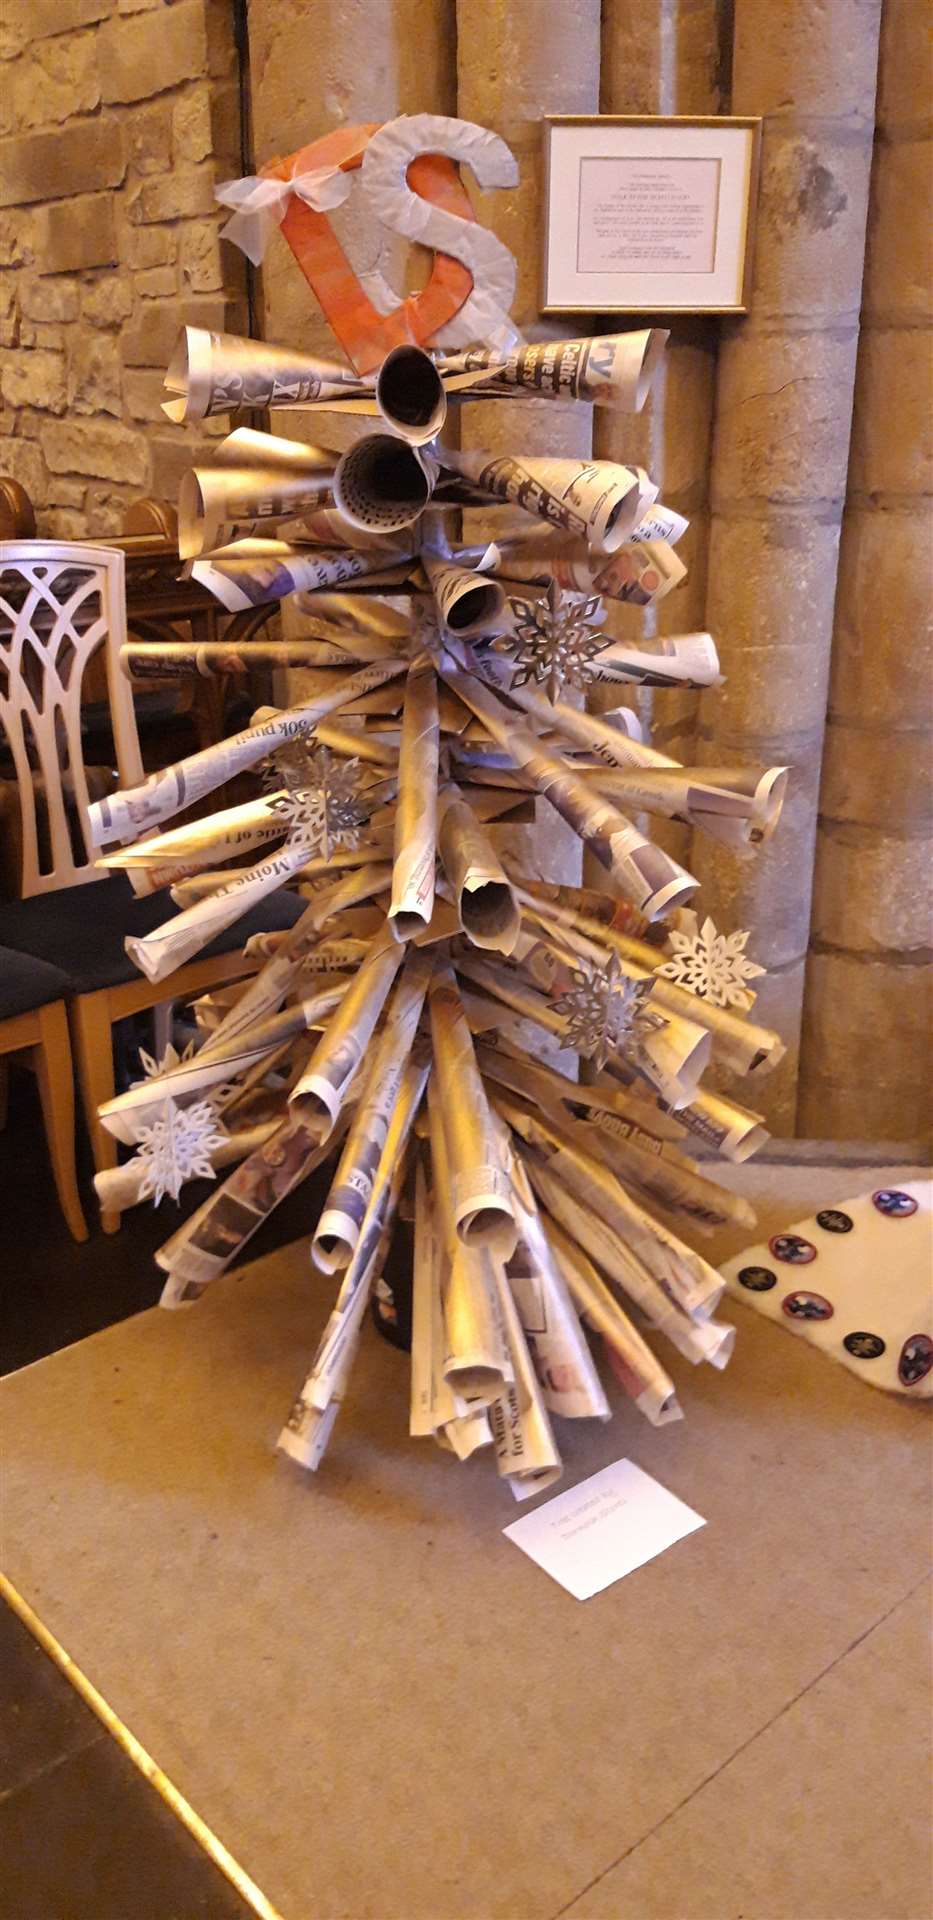 The Dornoch Stores Christmas trees.